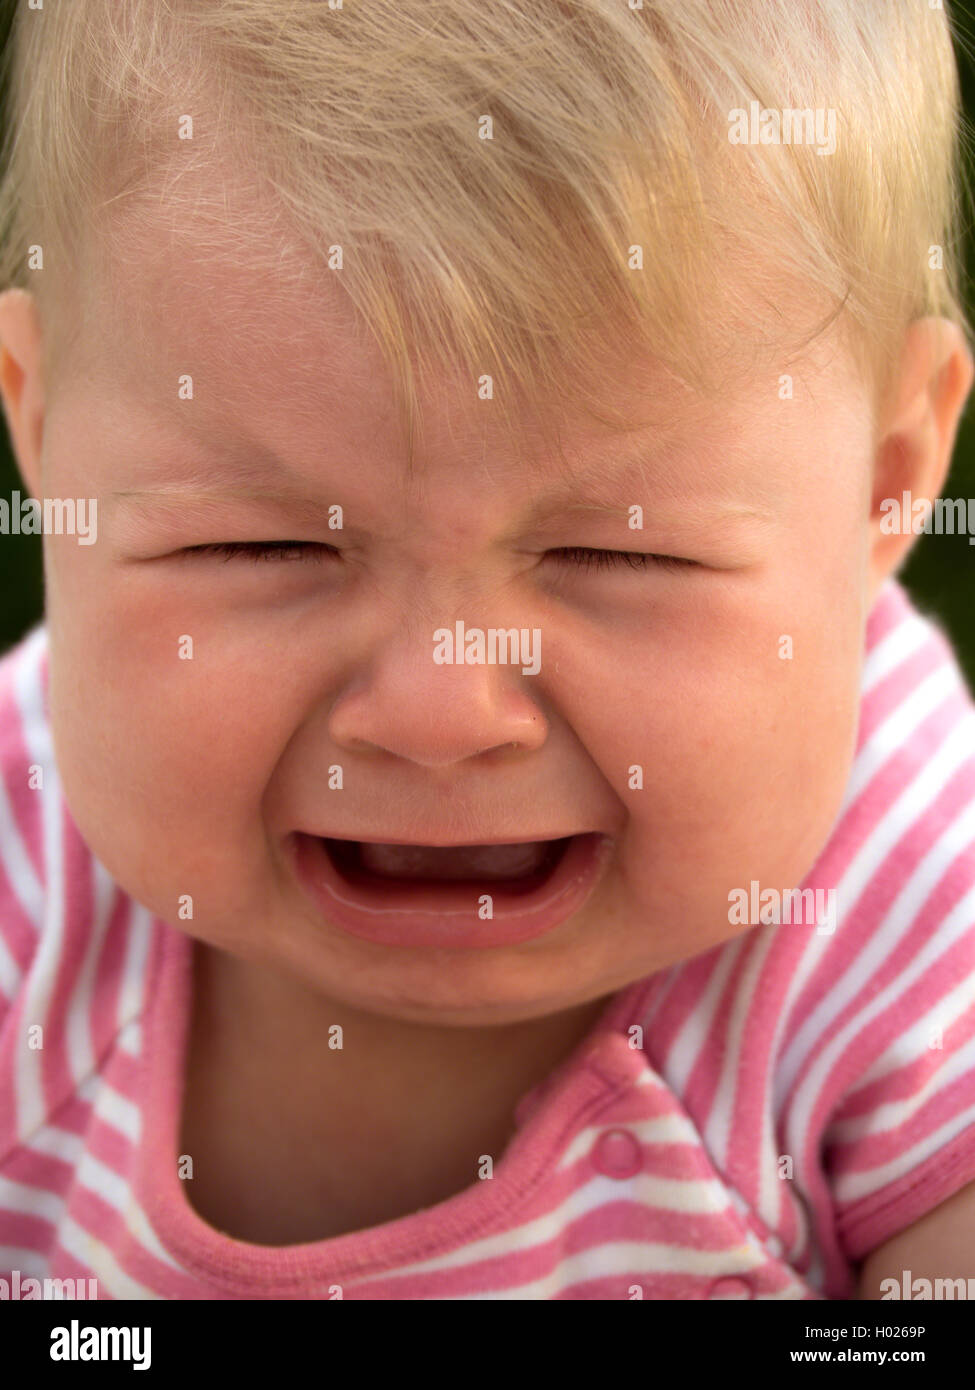 weeping baby, portrait, Austria Stock Photo